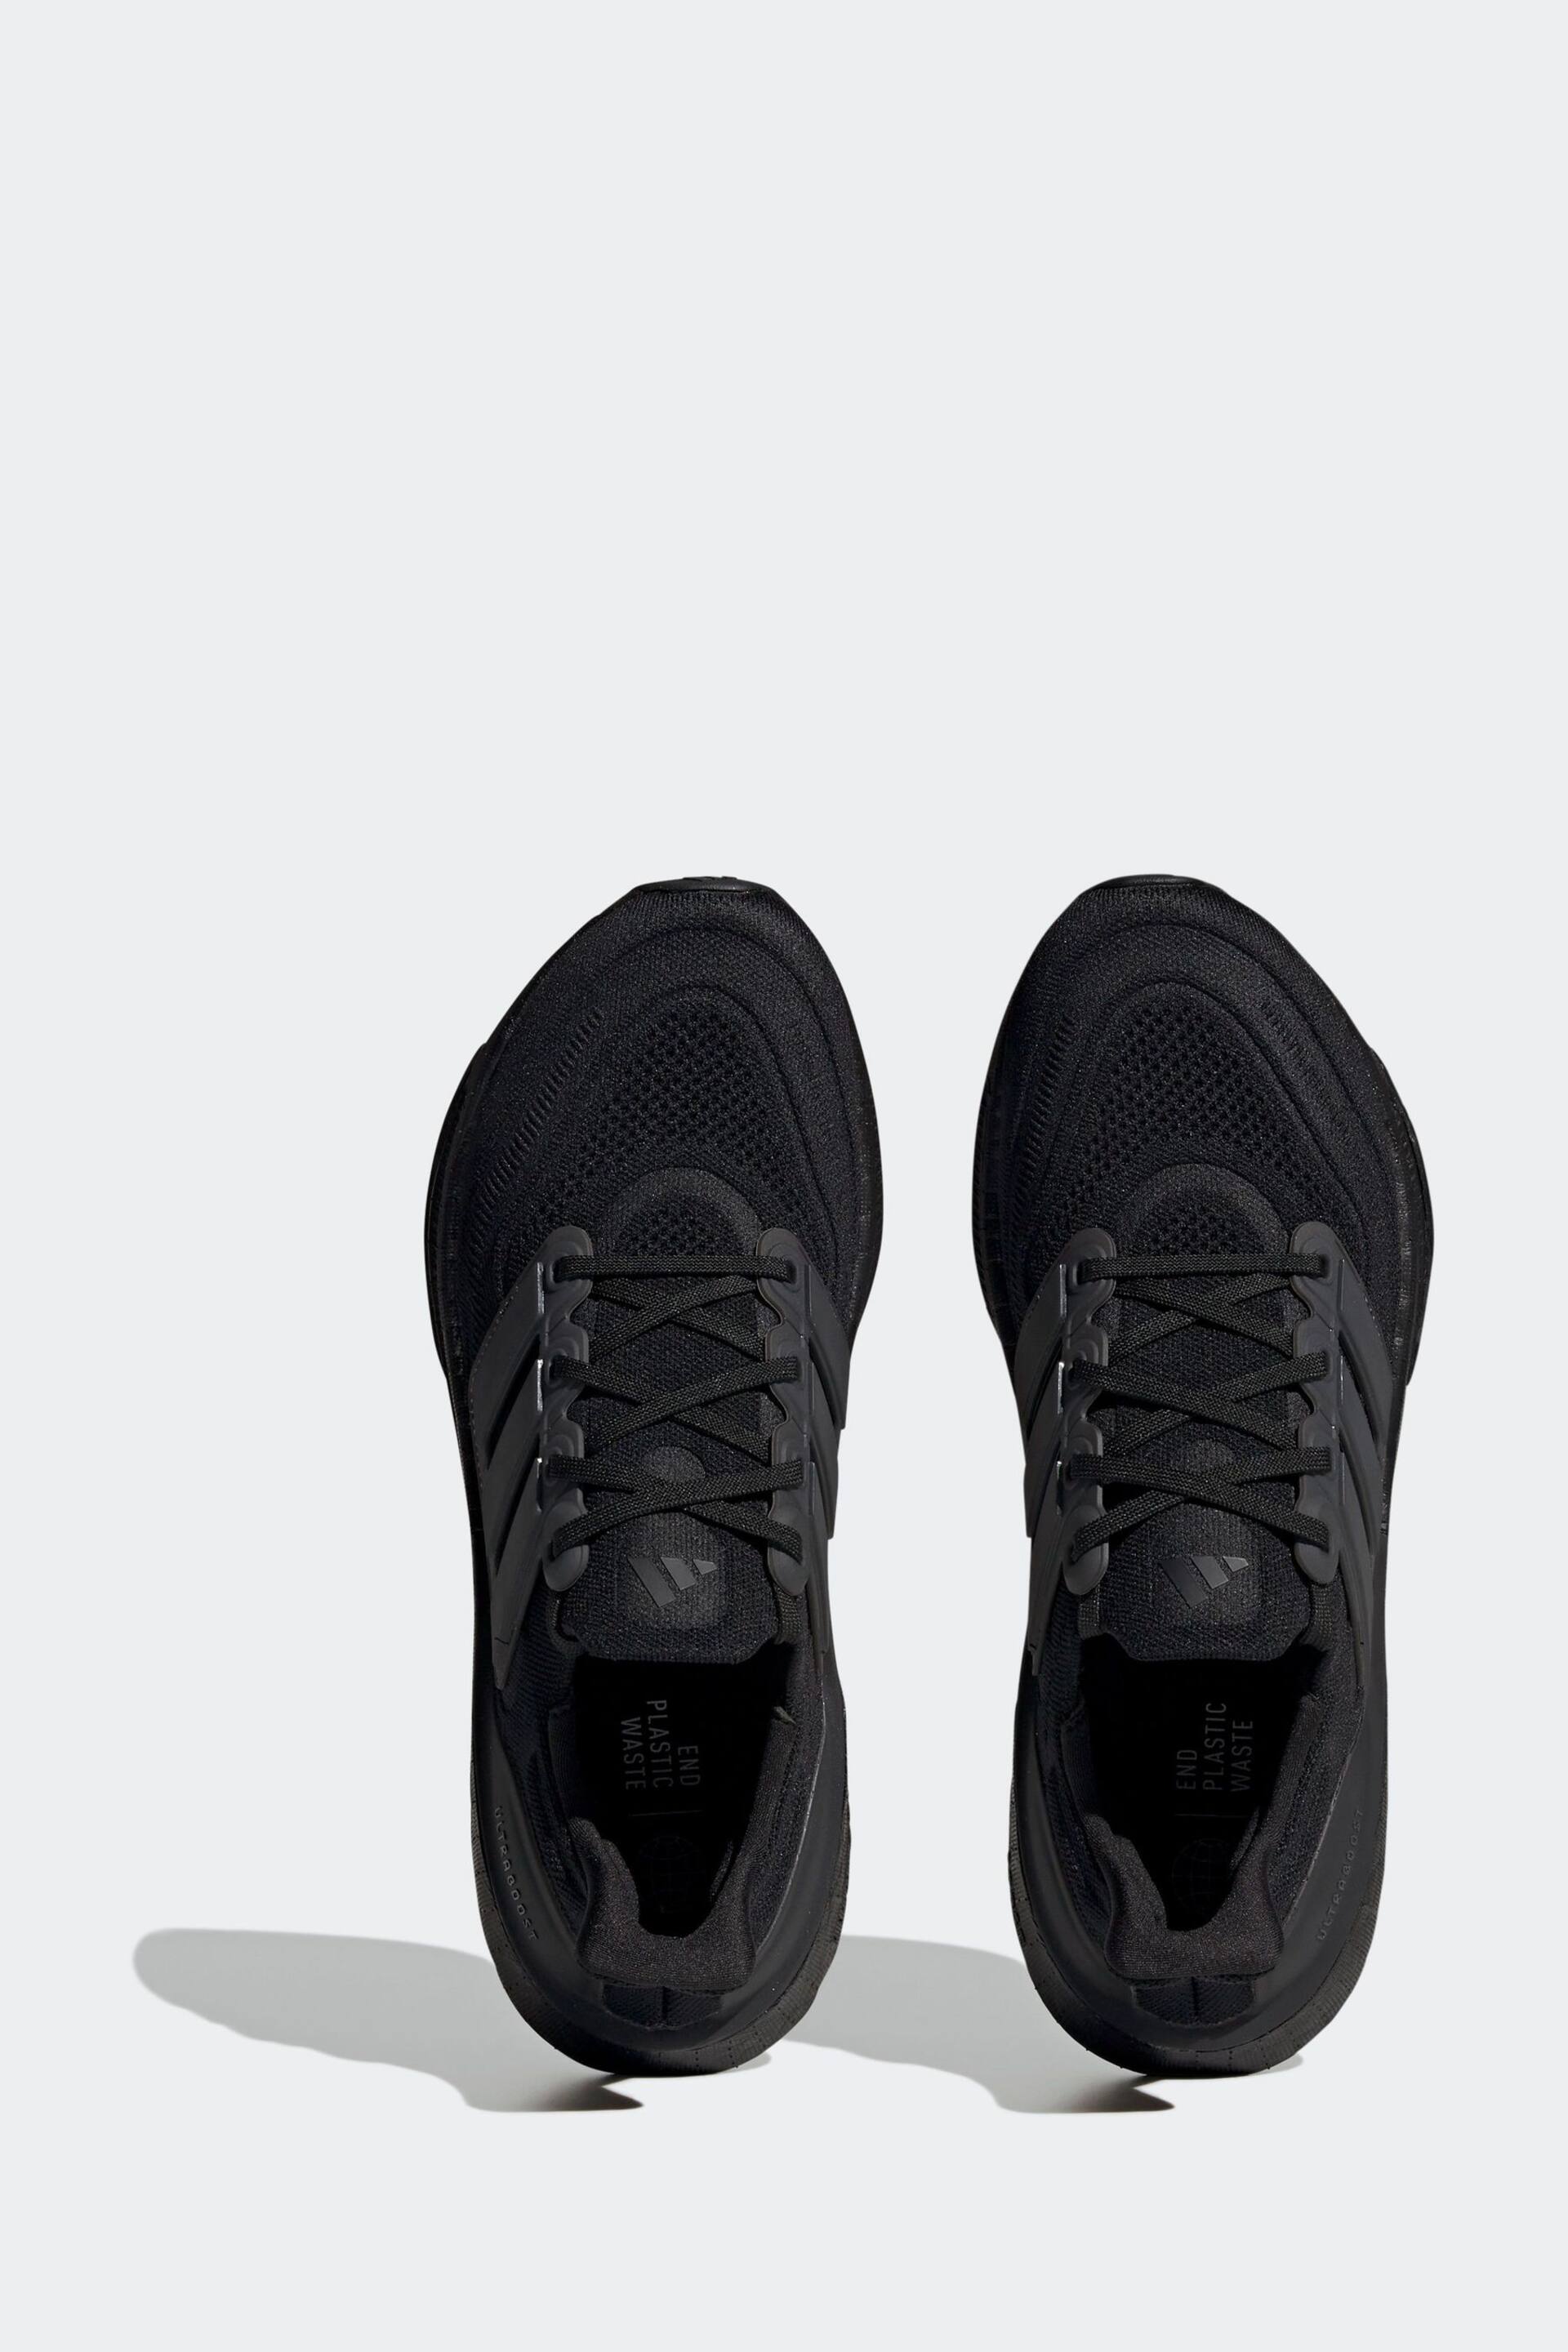 adidas Black Ultraboost Light Trainers - Image 6 of 11